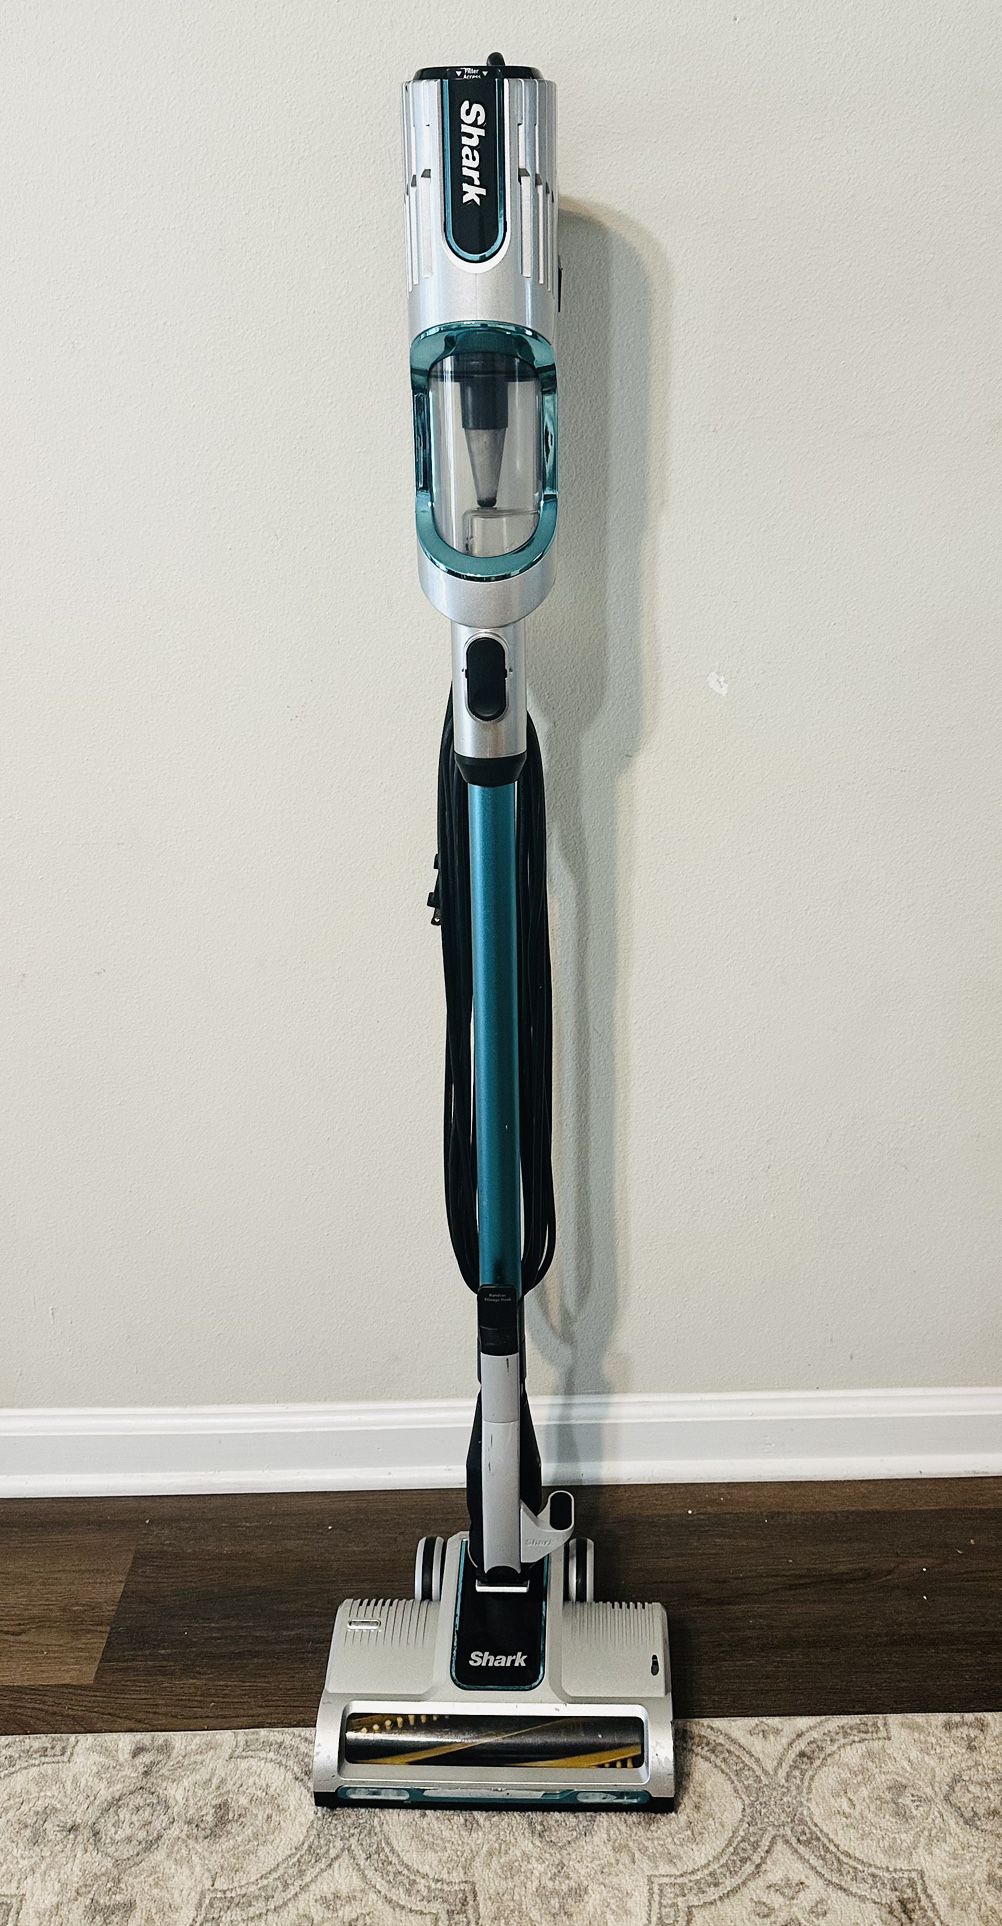 SHARK HZ251 Ultralight Corded Stick Vacuum with Self-Cleaning Brushroll, Blue/White (Renewed)